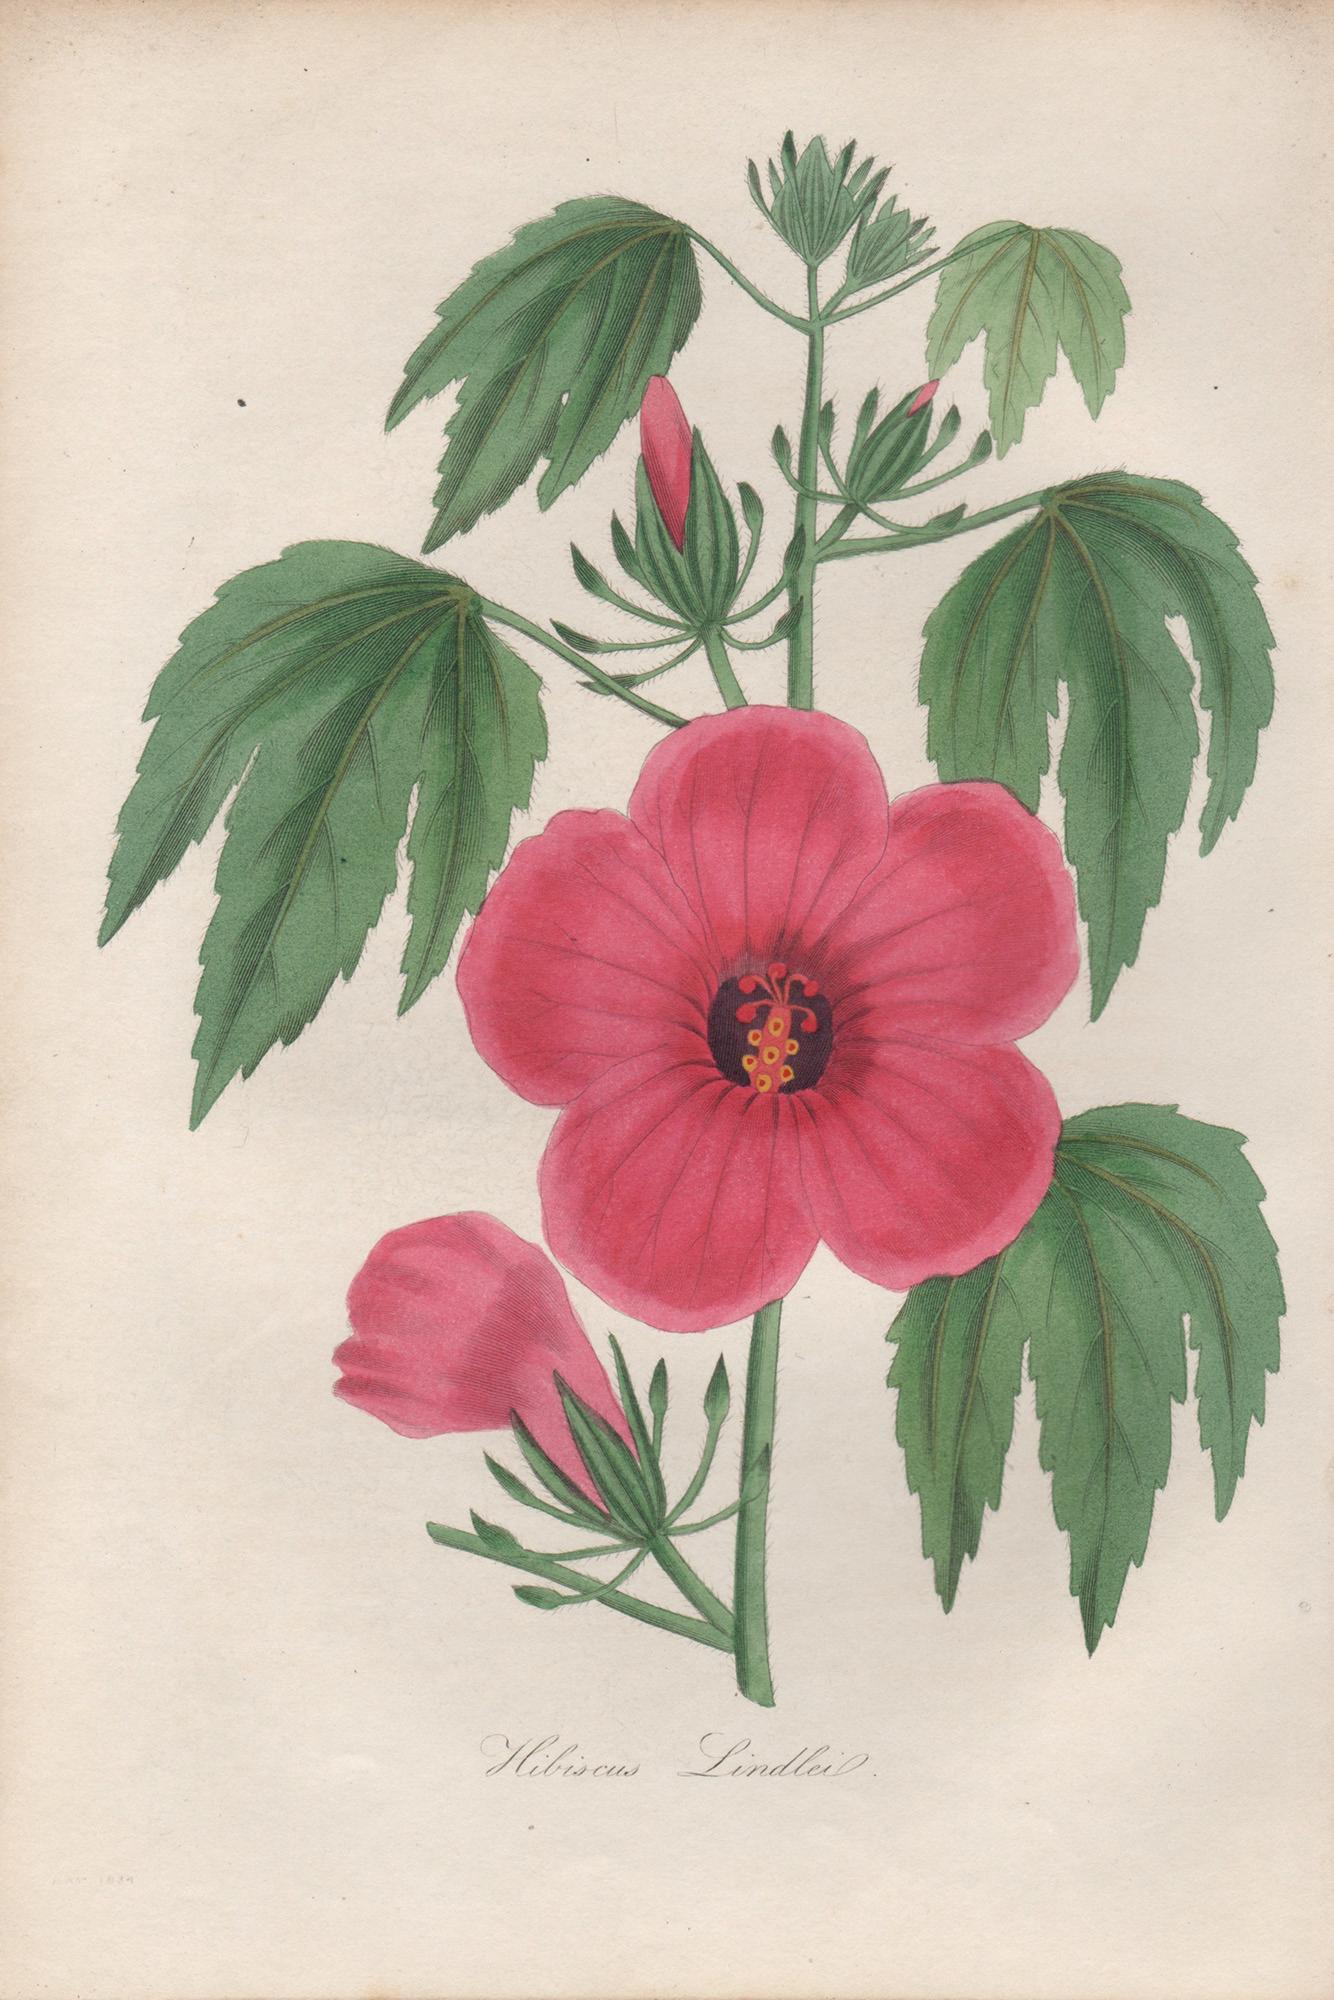 Frederick William Smith Print – Hibiskus Lindlei, antike botanische rosa Blumengravur